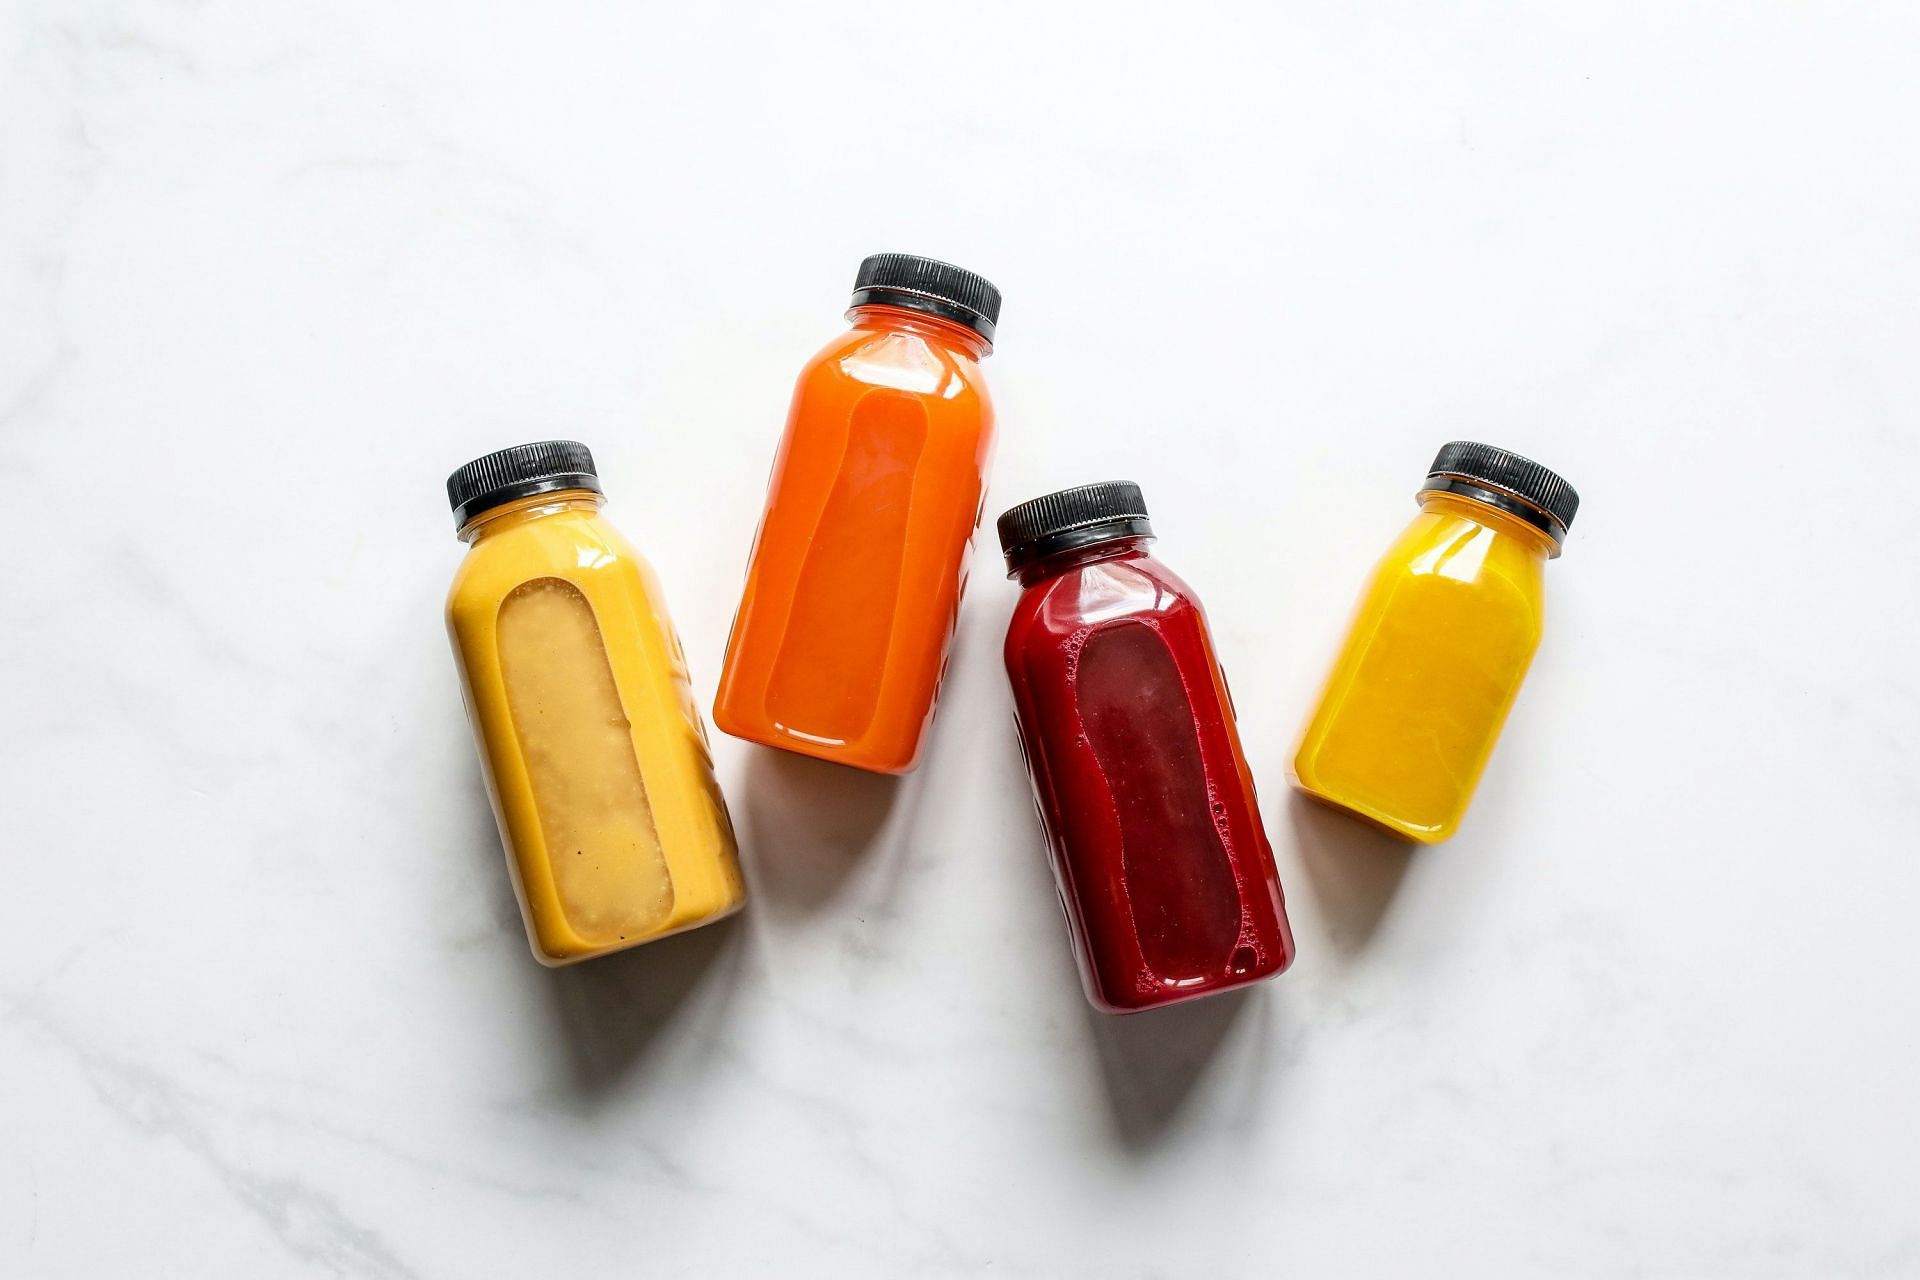 Drink more orange juice. (Image via Pexels/Polina Tankilevitch)